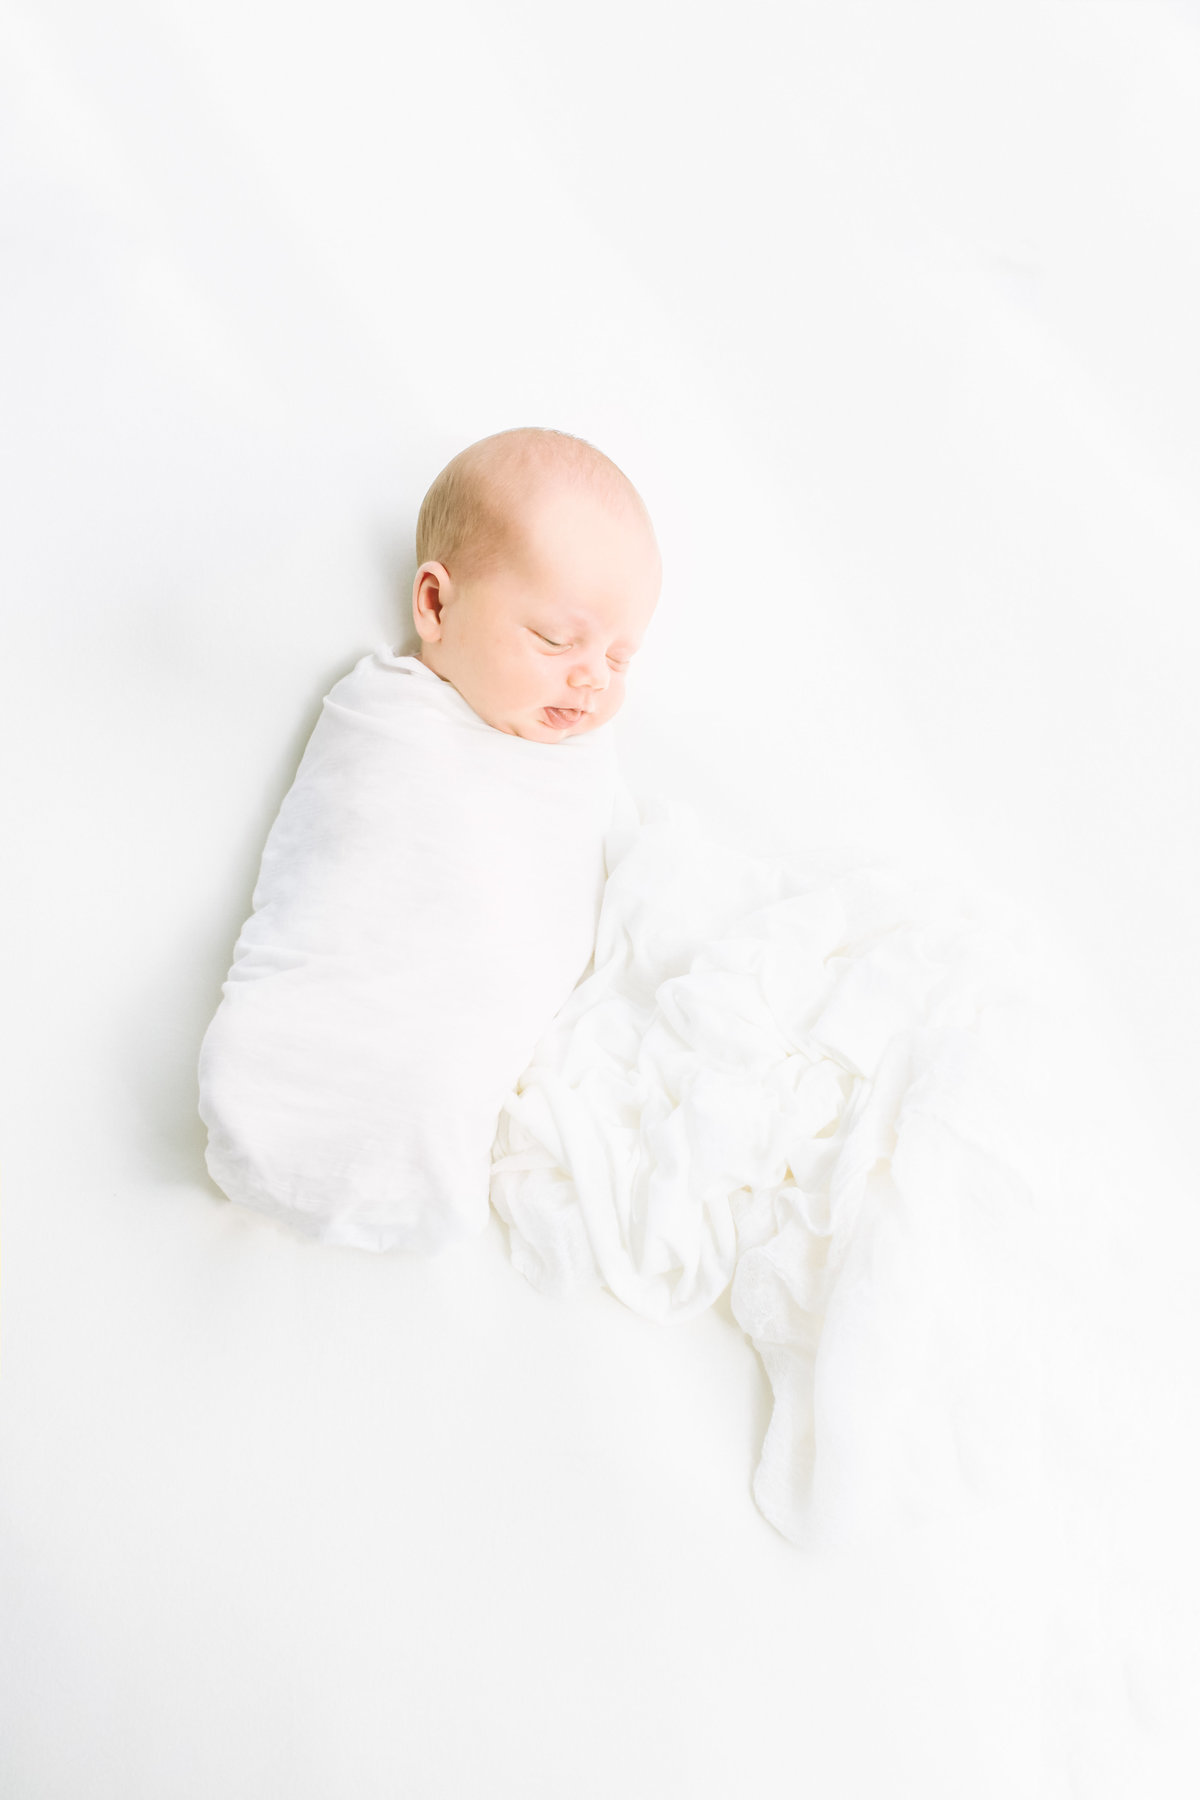 Newborn Photography - Sana Ahmed Portrait Photography (20)